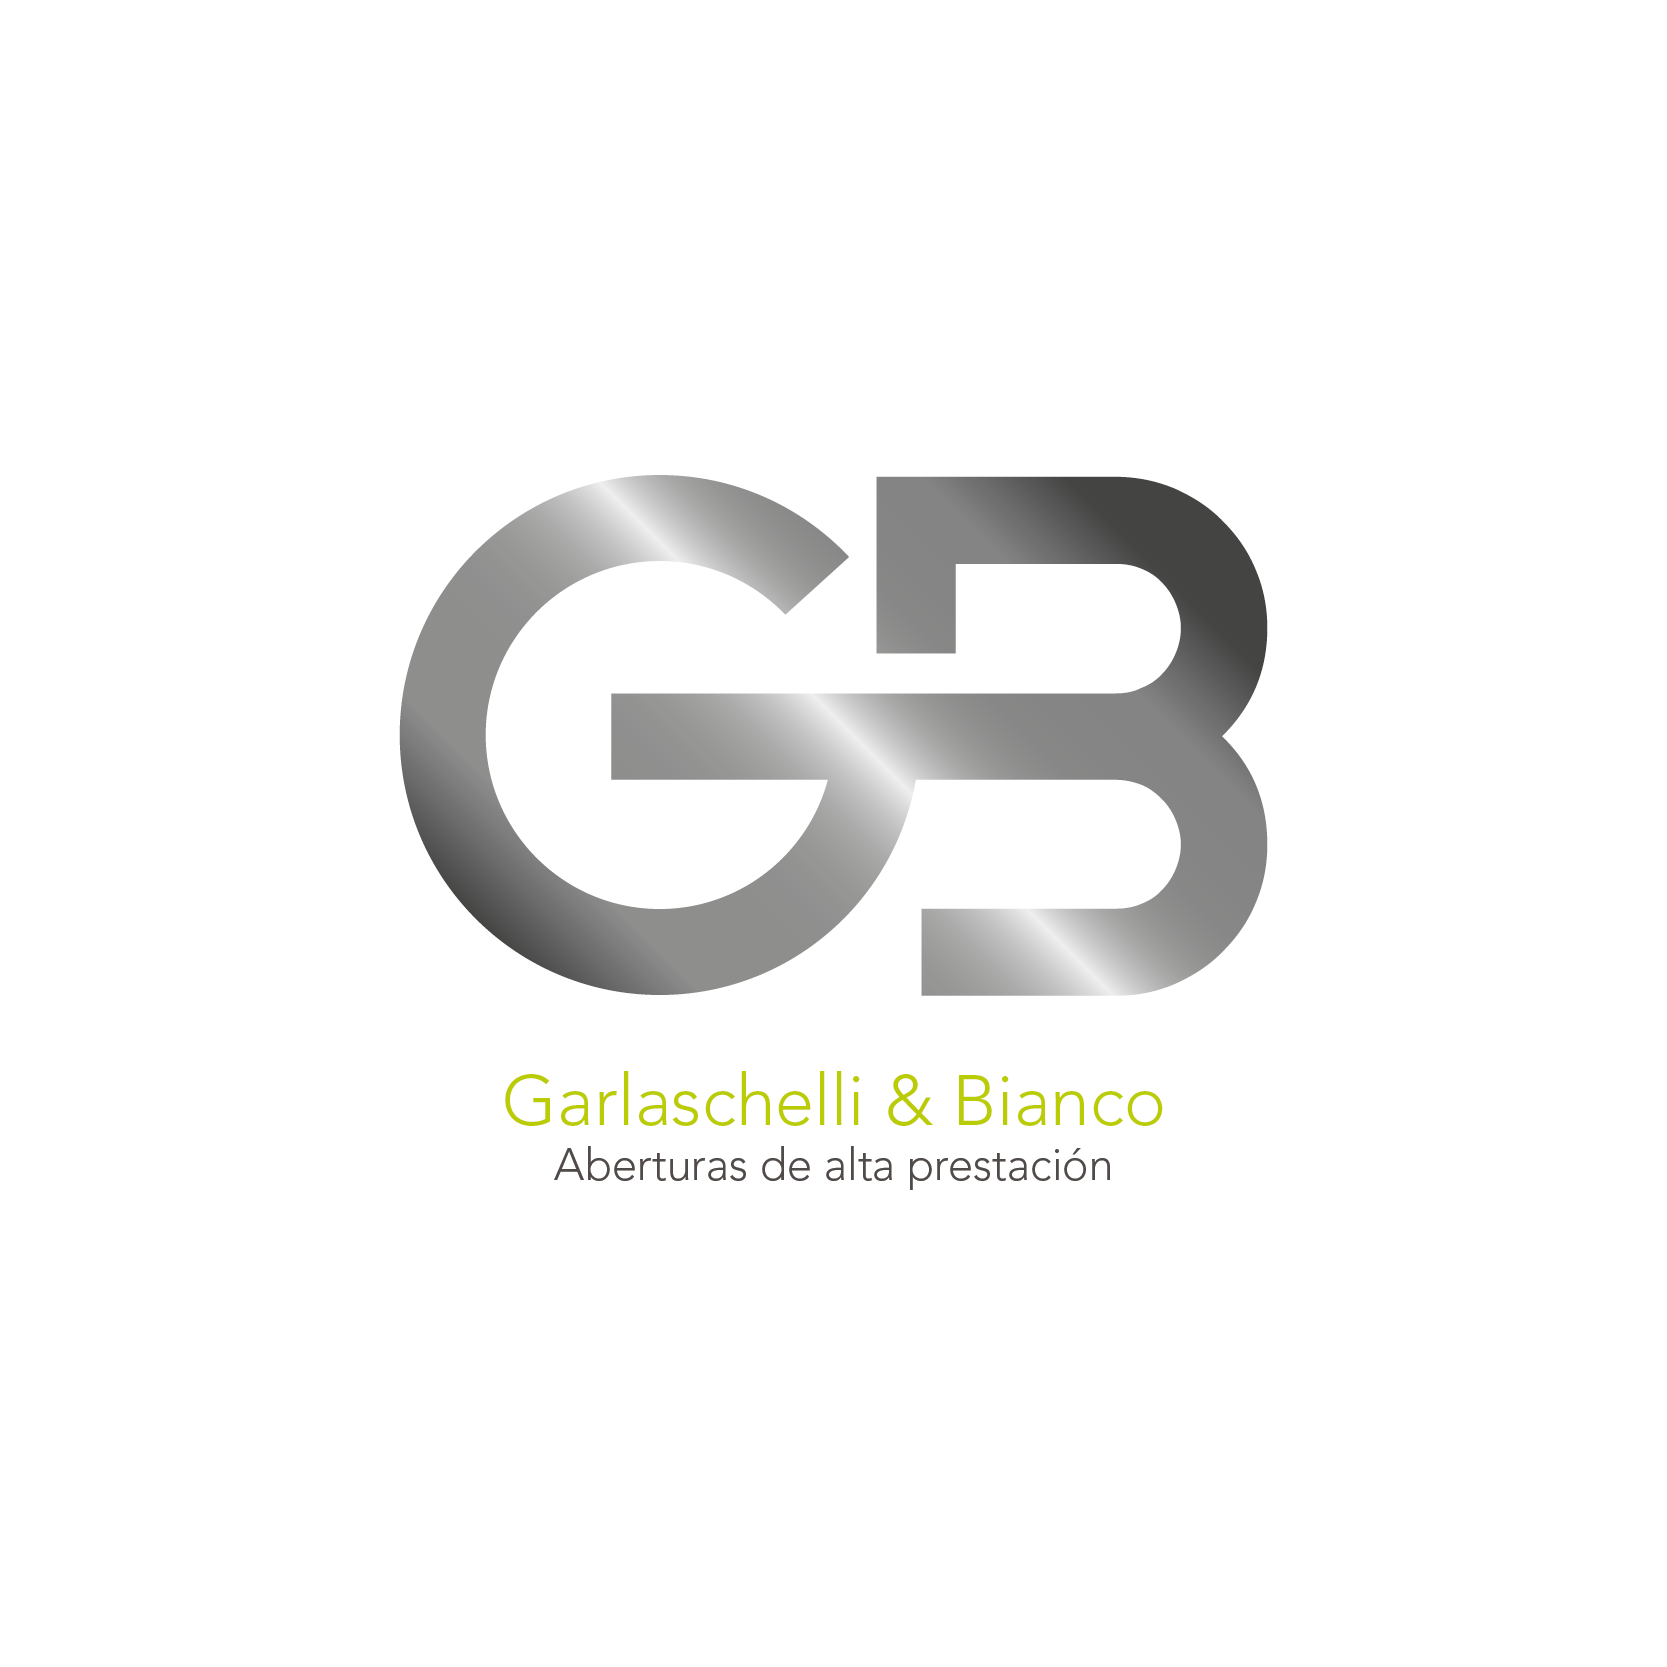 Diseño Isologotipo de Garlascheli & Bianco